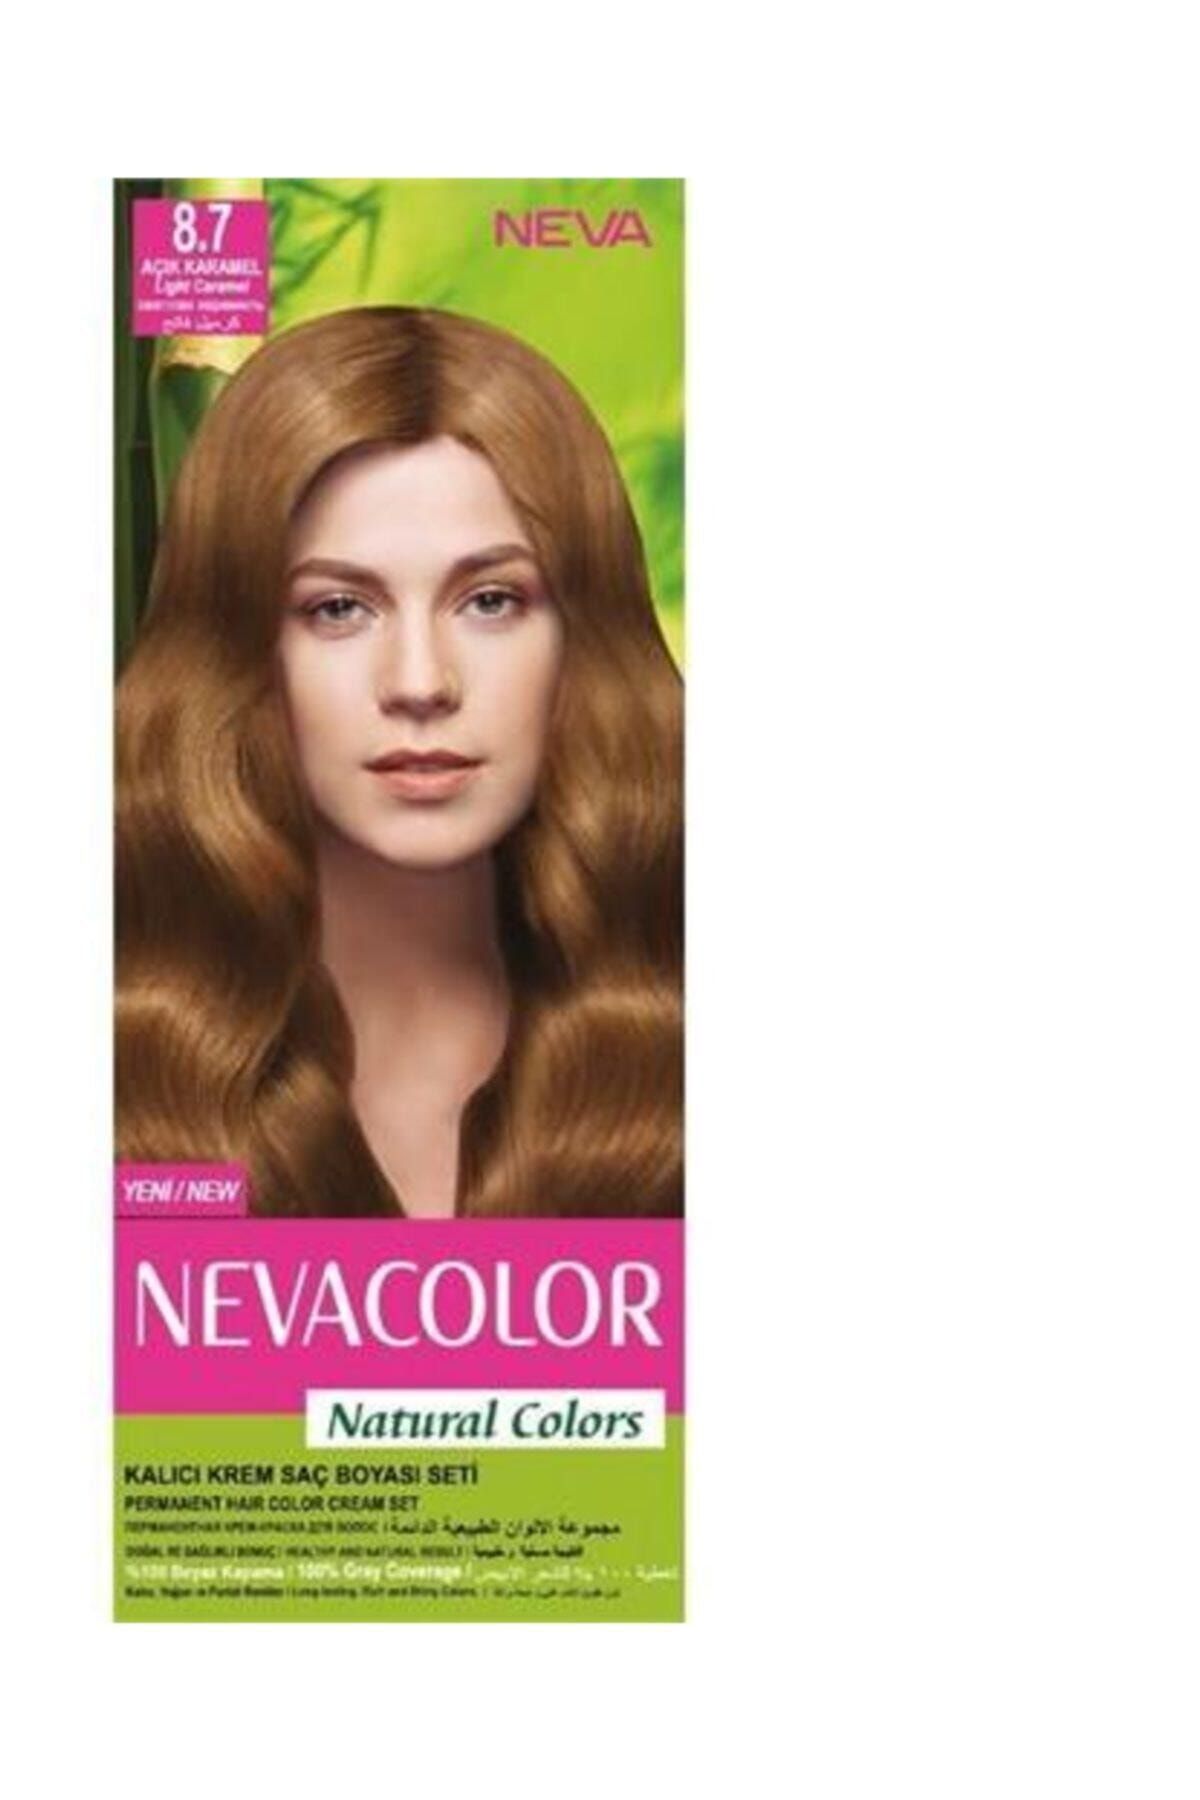 Neva Color Natural Colors Kalıcı Saç Boya Seti 8.7 Açık Karamel